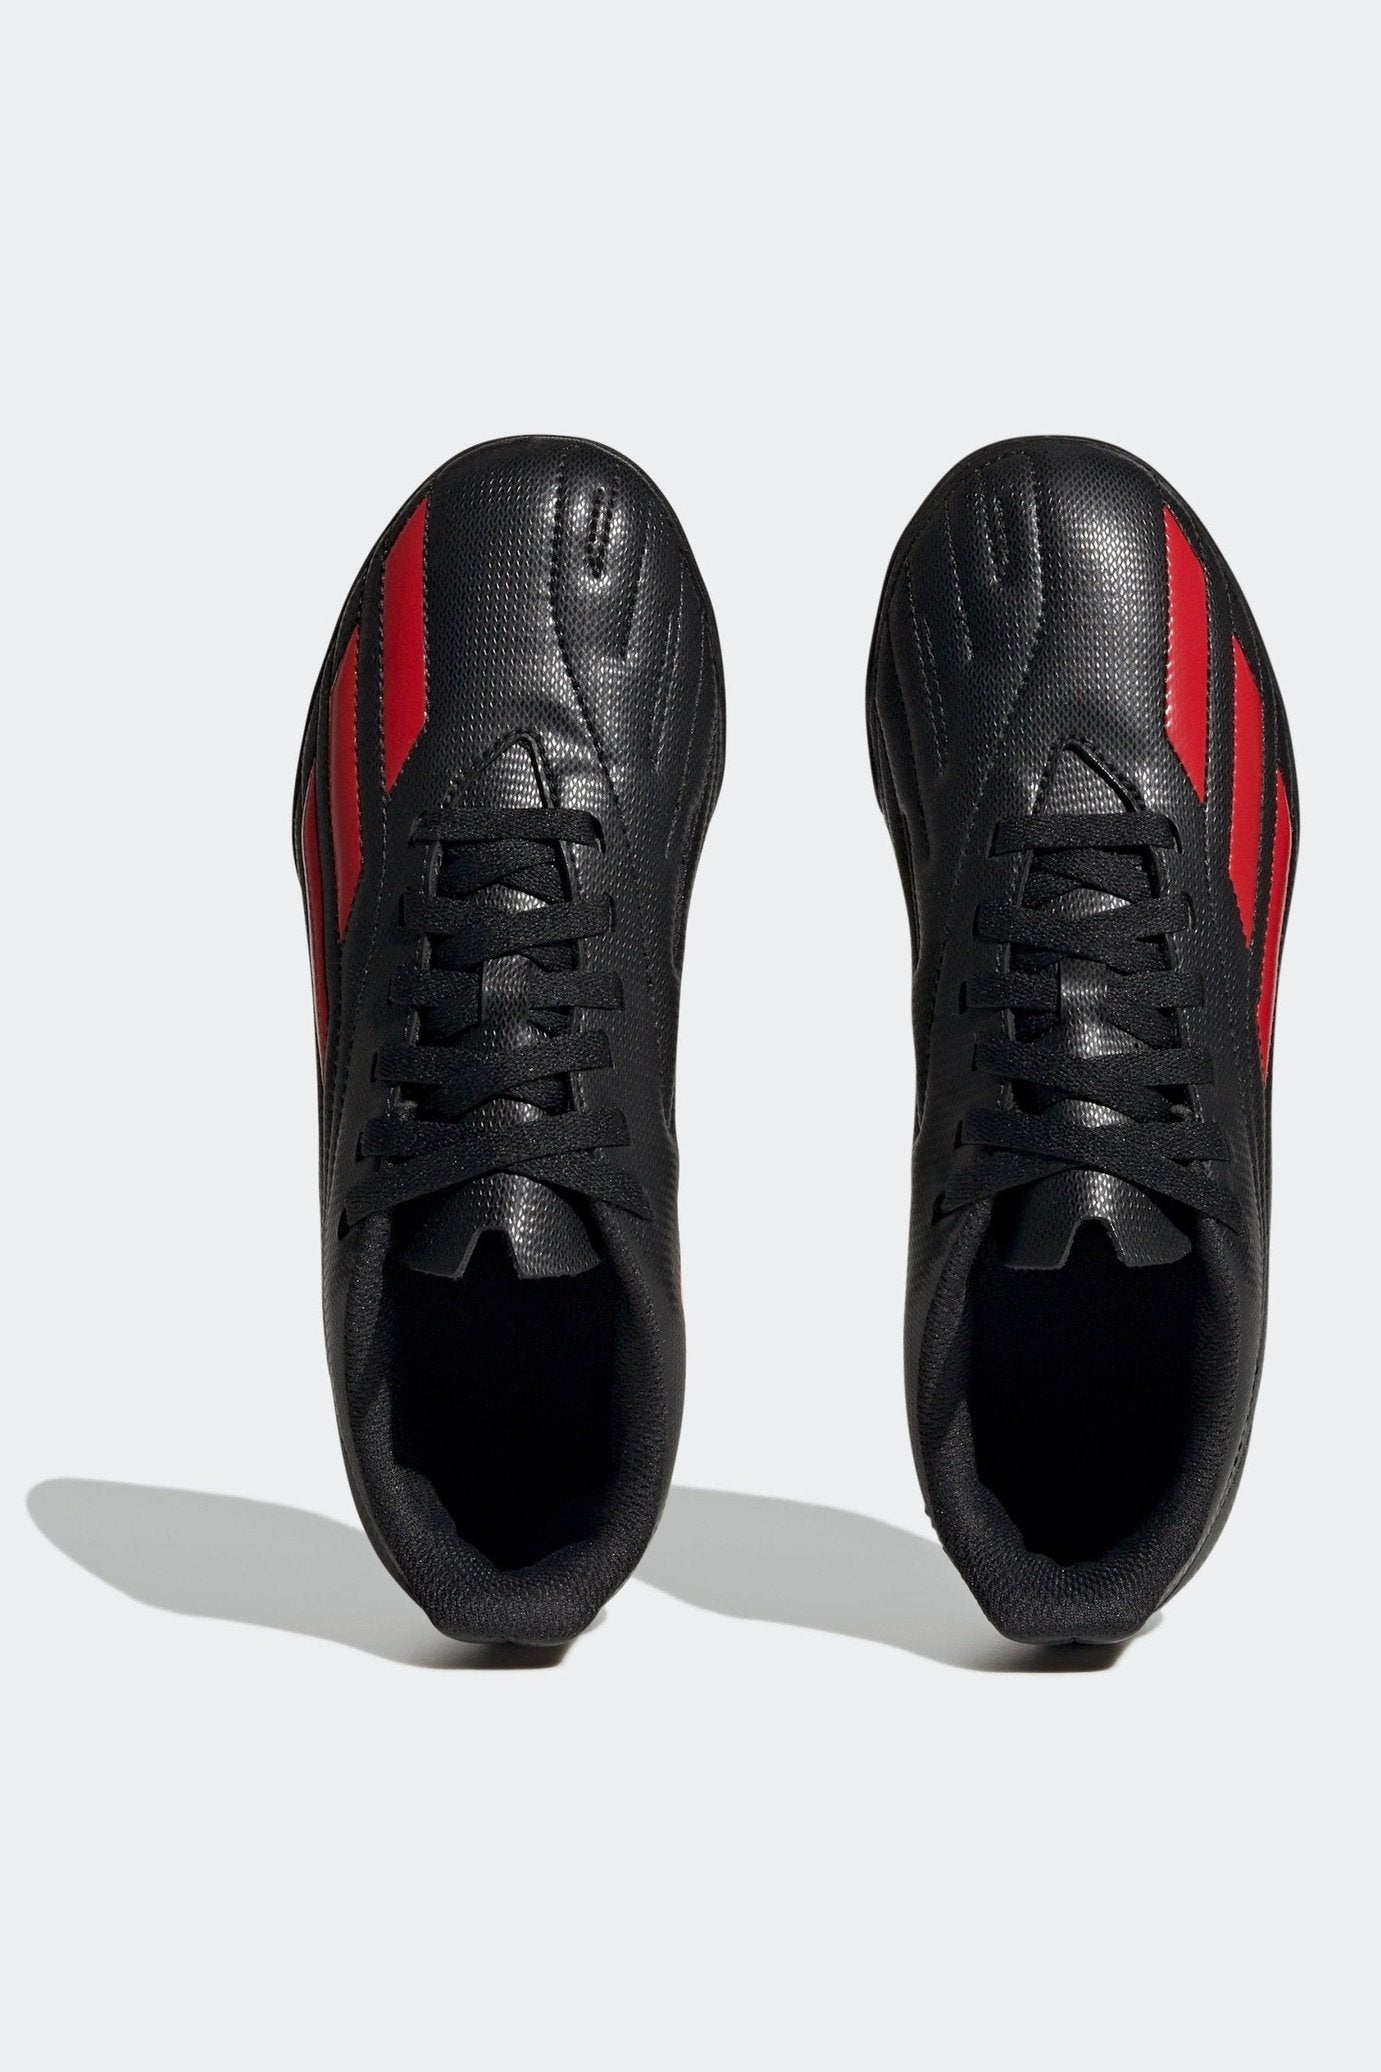 ADIDAS - נעלי קטרגל לנוער DEPORTIVO 2 בצבע שחור ואדום - MASHBIR//365